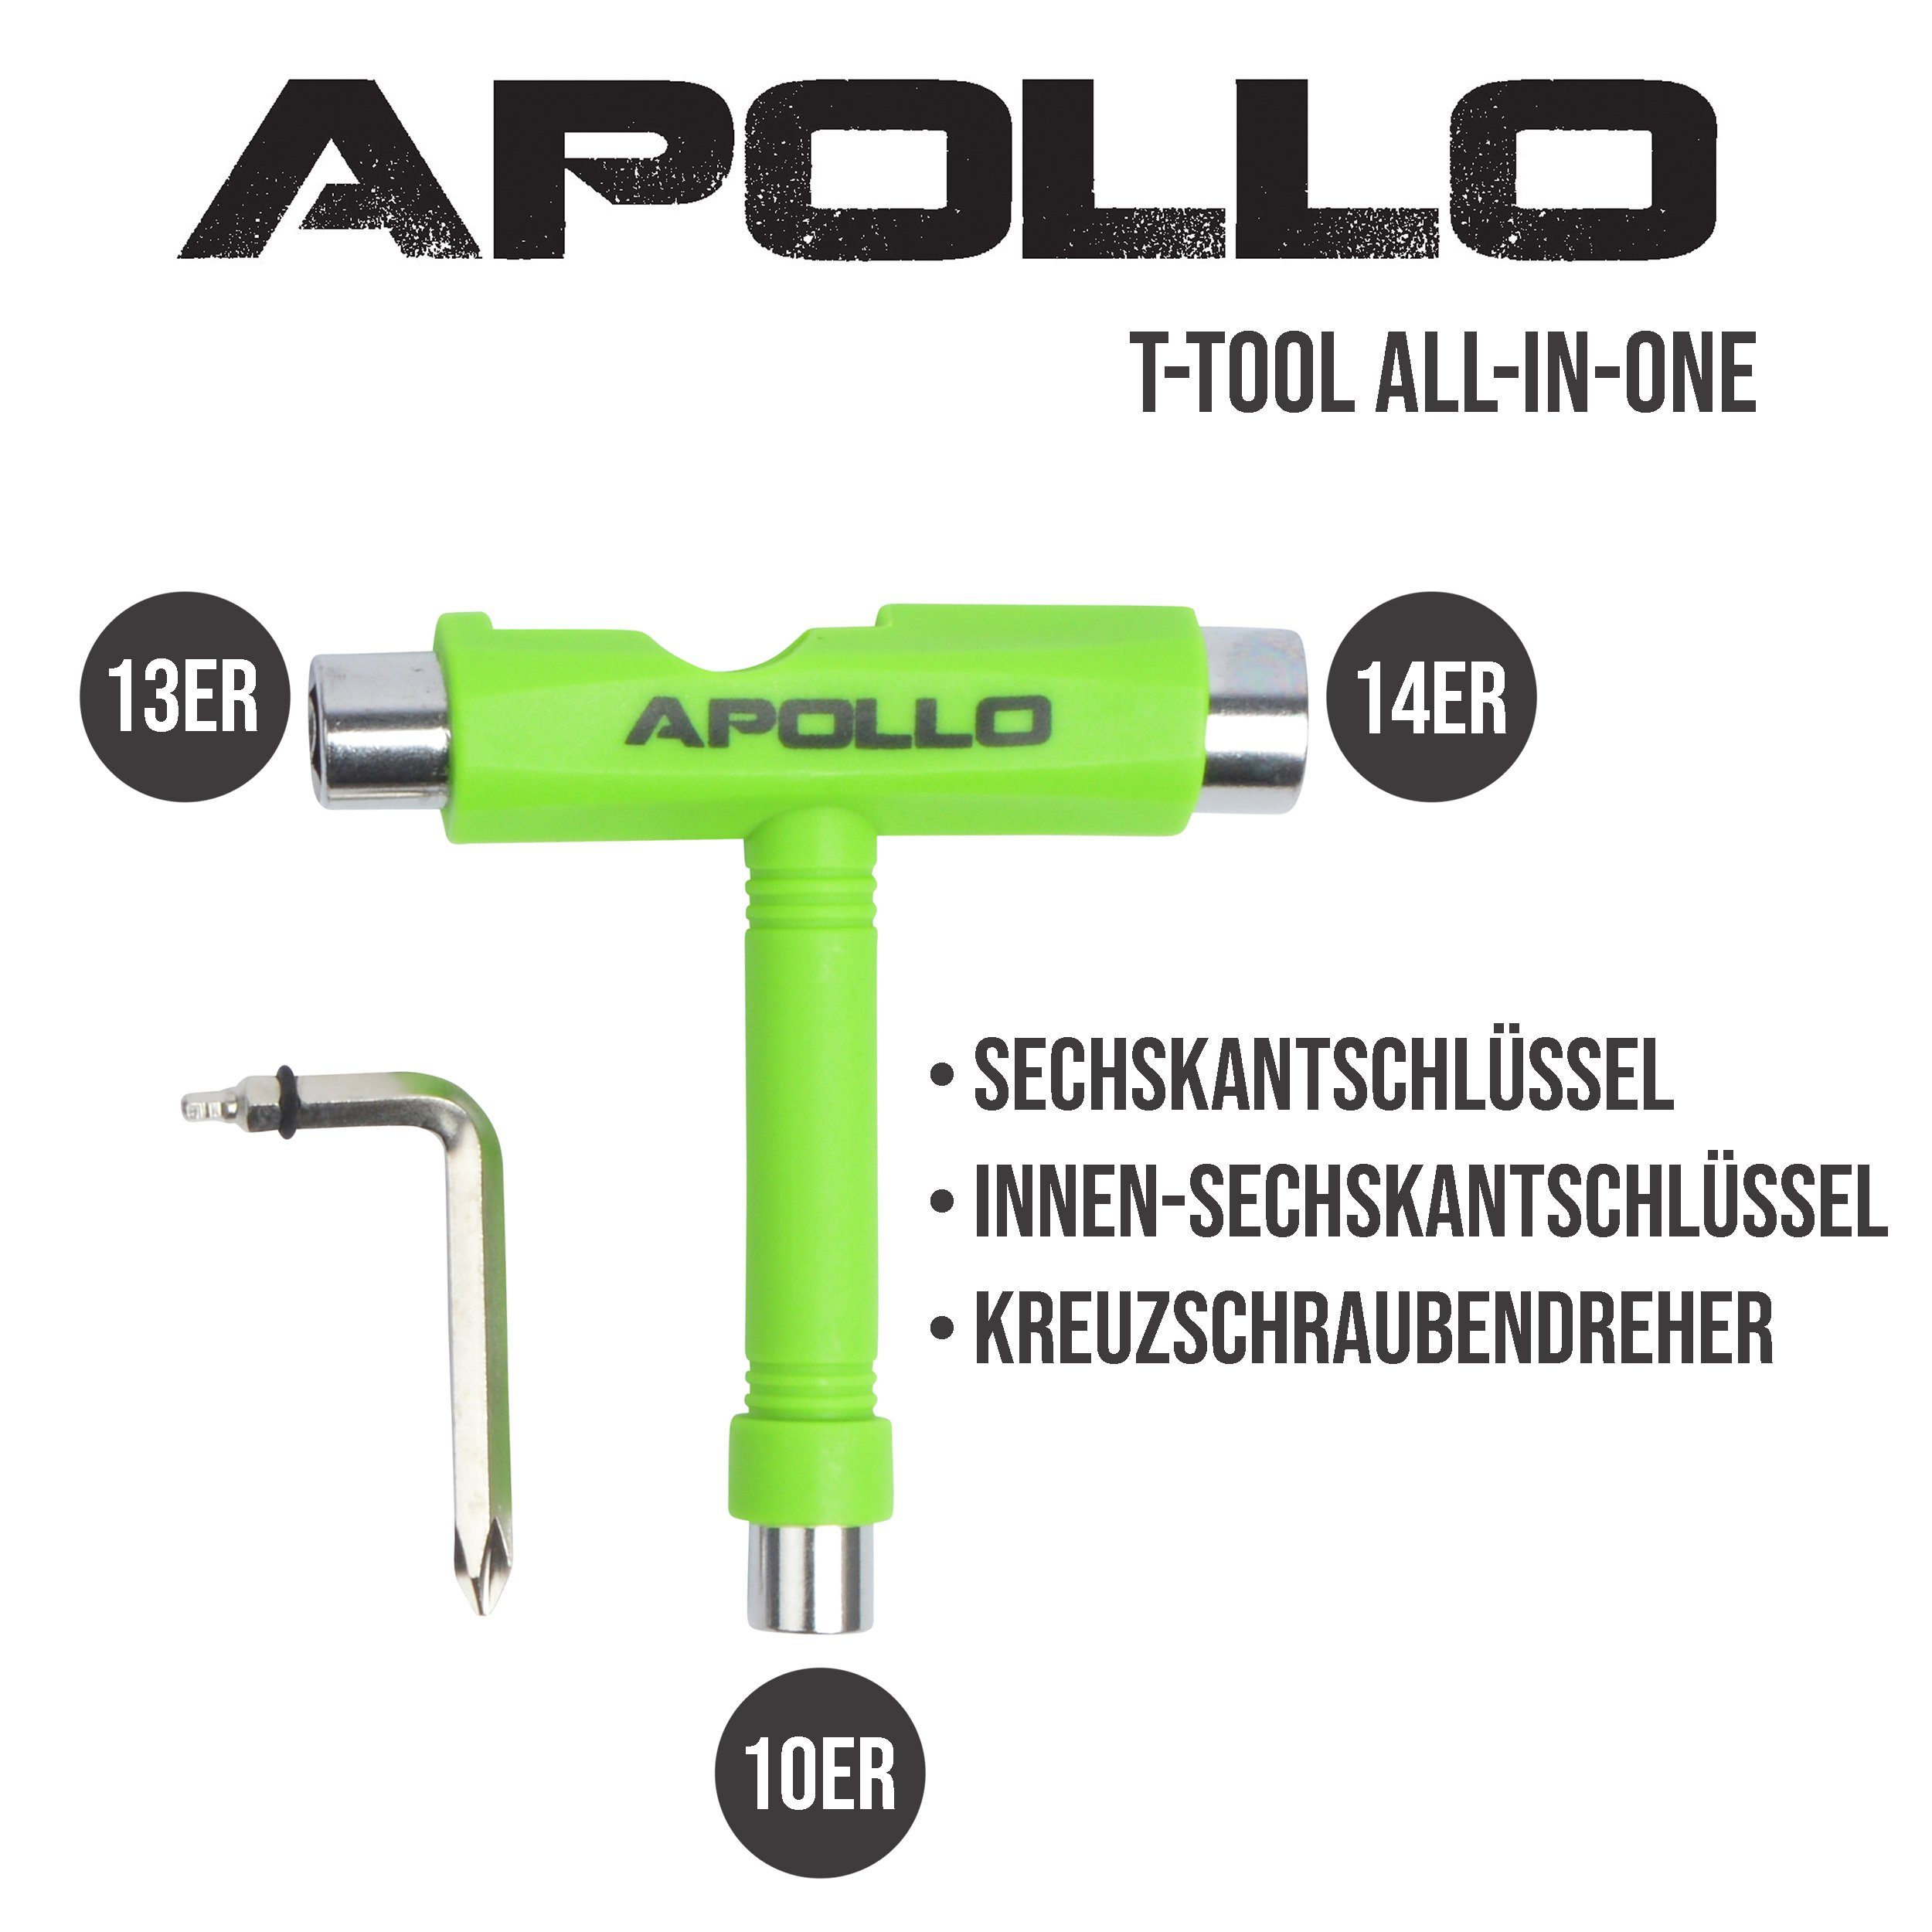 Apollo Skateboard T-Tool Schraubenschlüssel Grün Longboard Skateboard, Scooter, - Sechskantschlüssel, Multifunktions für All-In-One Tool